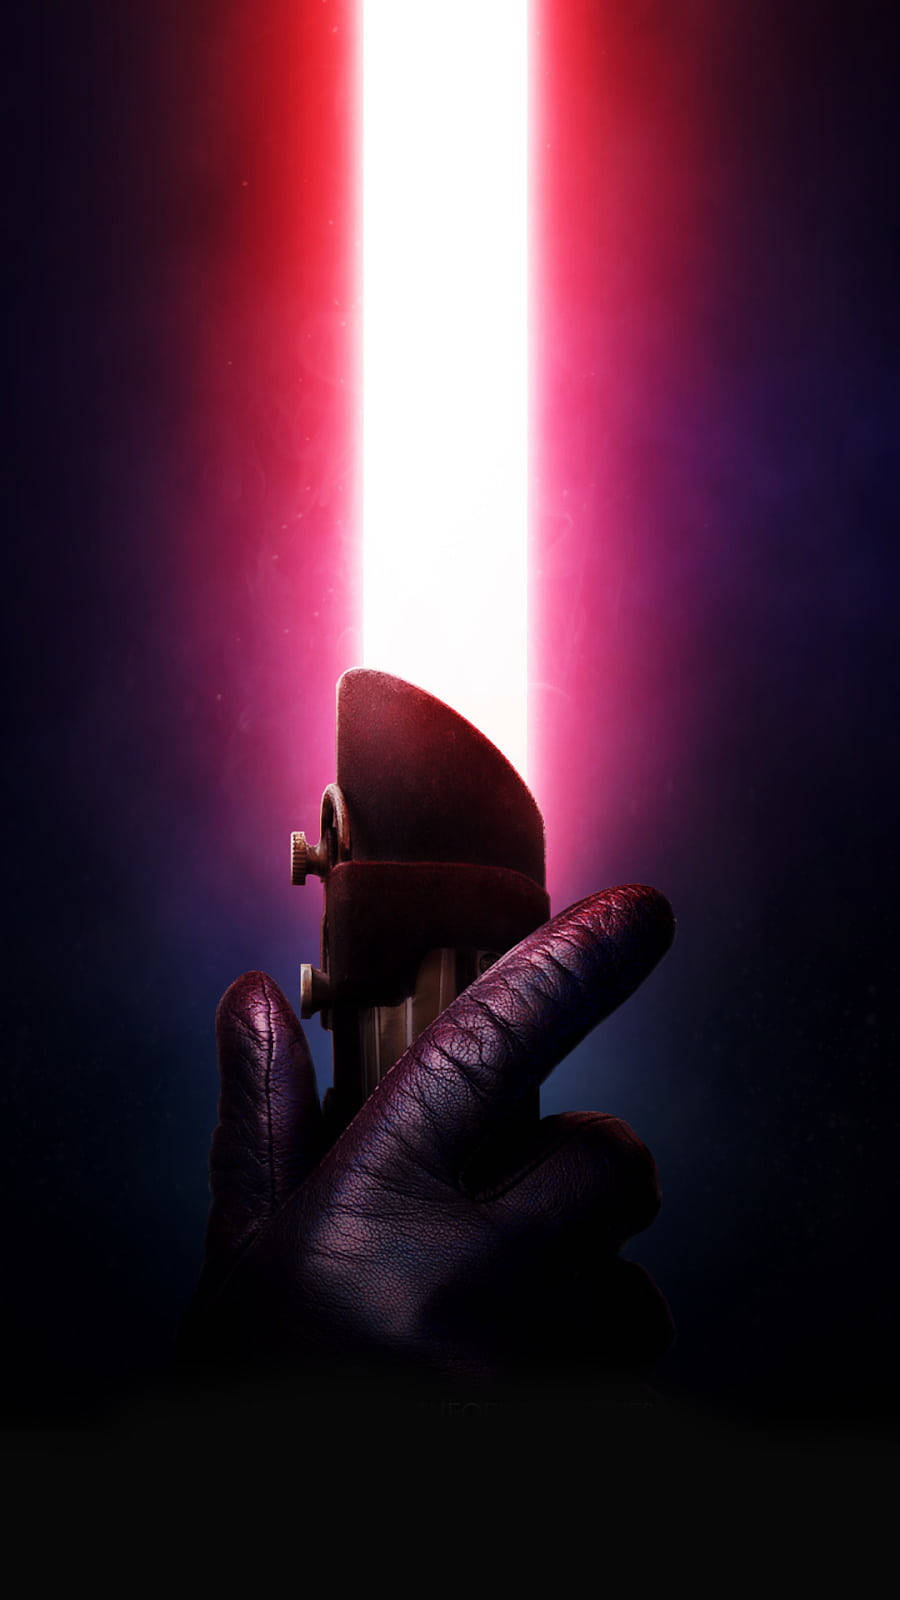 Star Wars Hand Holding Red Lightsaber Wallpaper